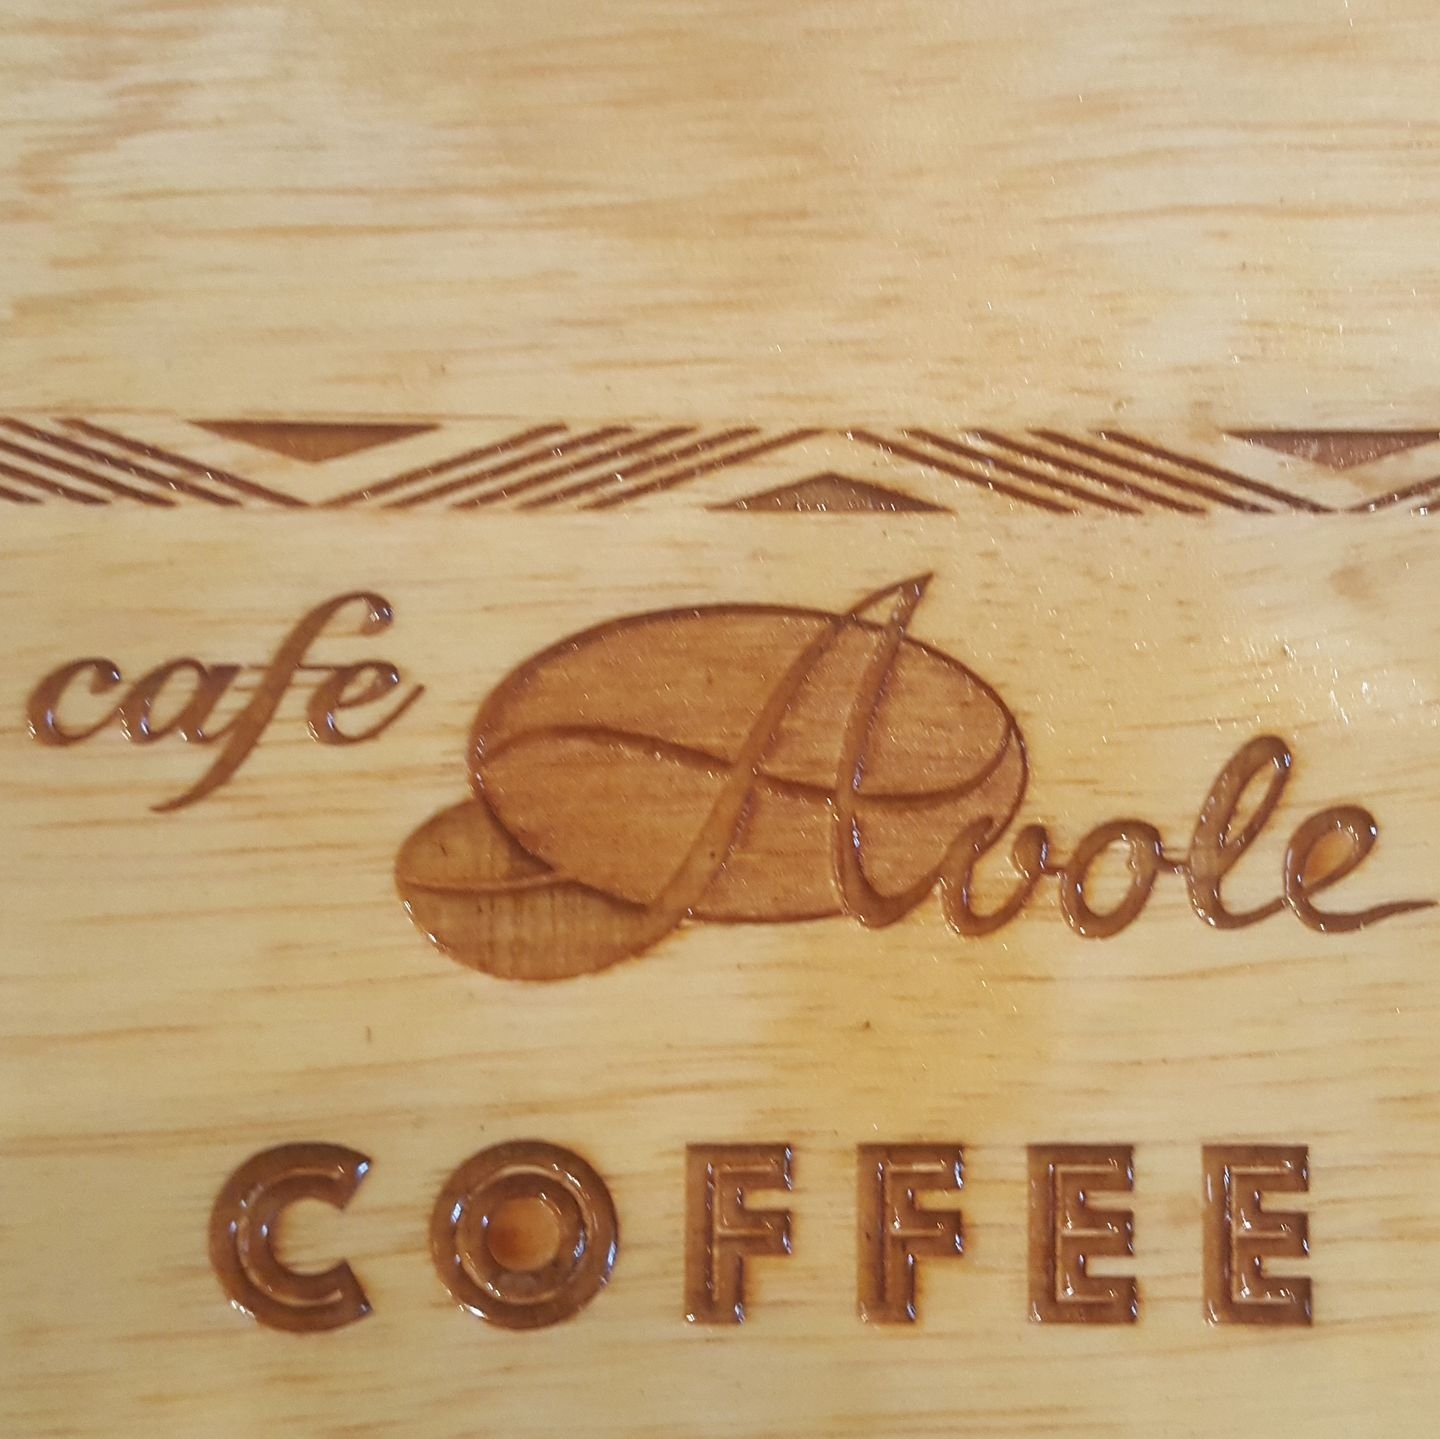 Cafe Avole